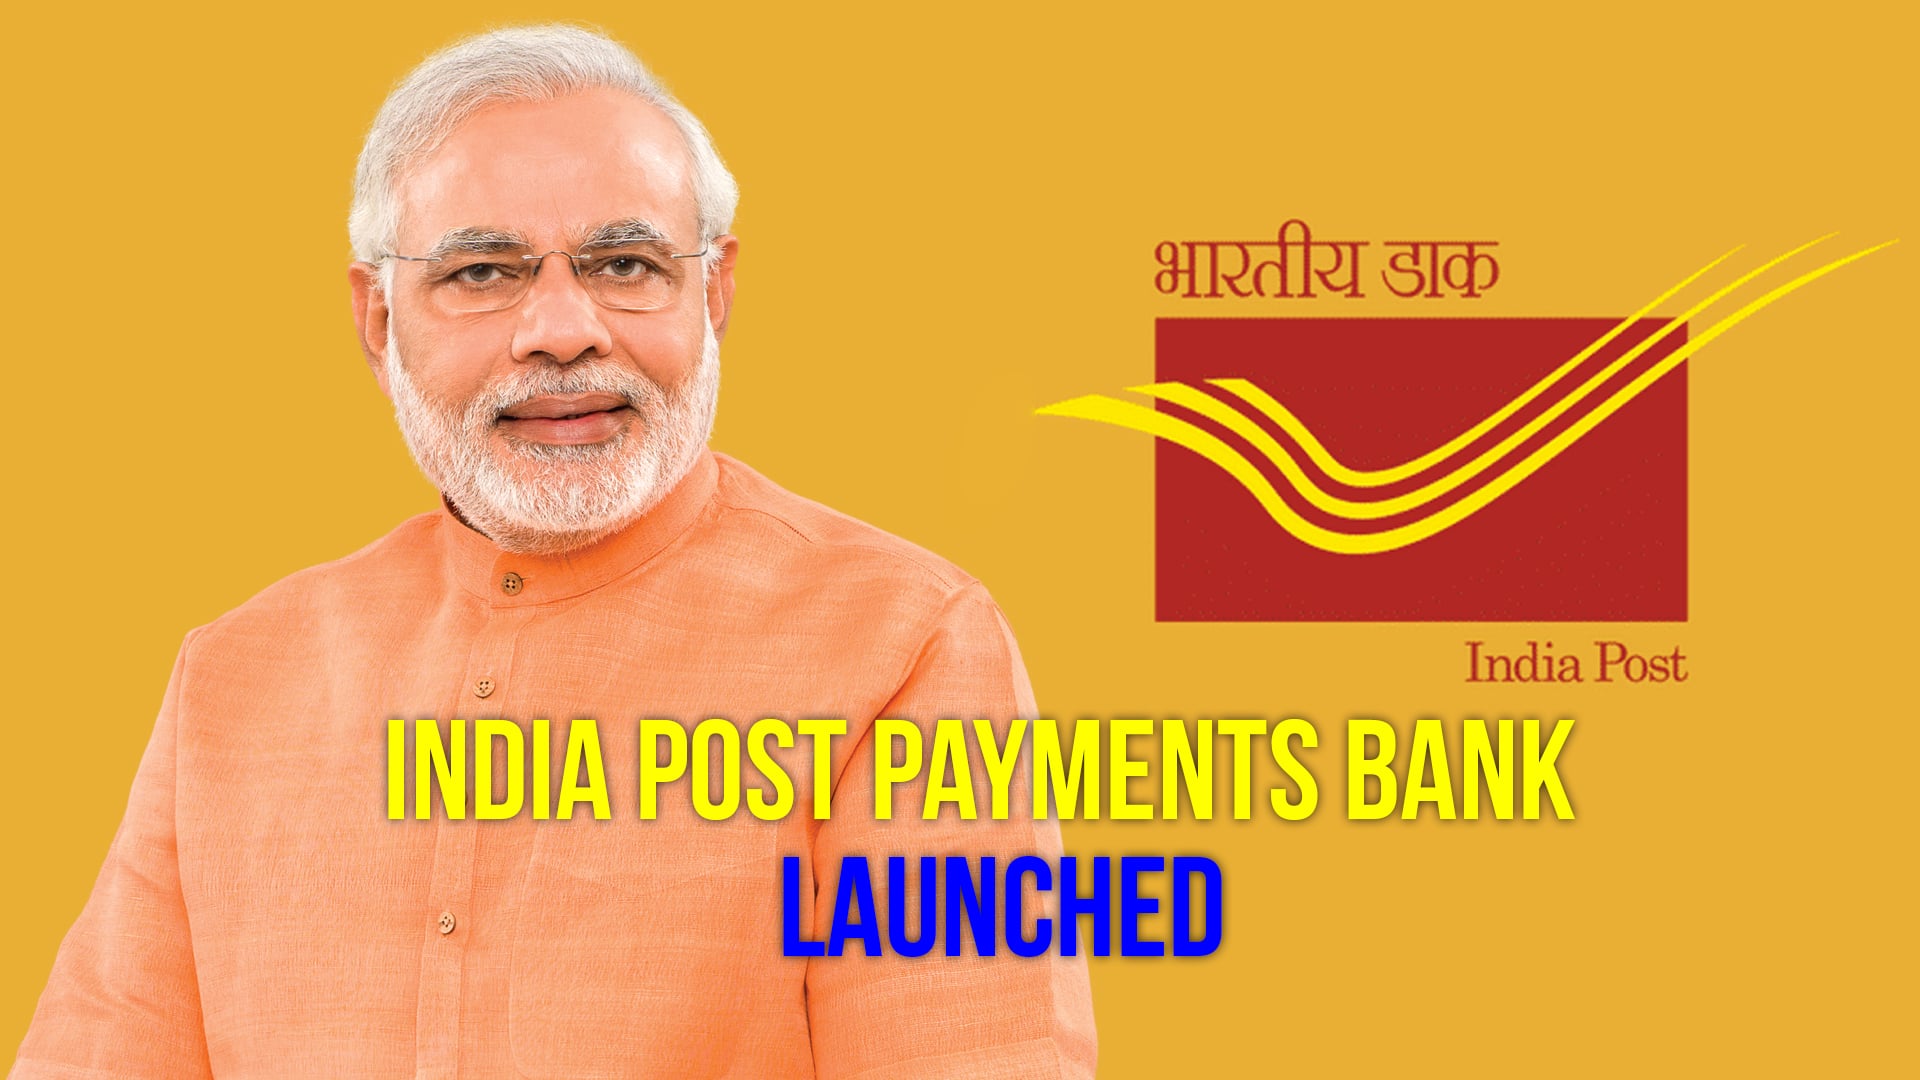 prime minister narendra modi India Post Payments Bank